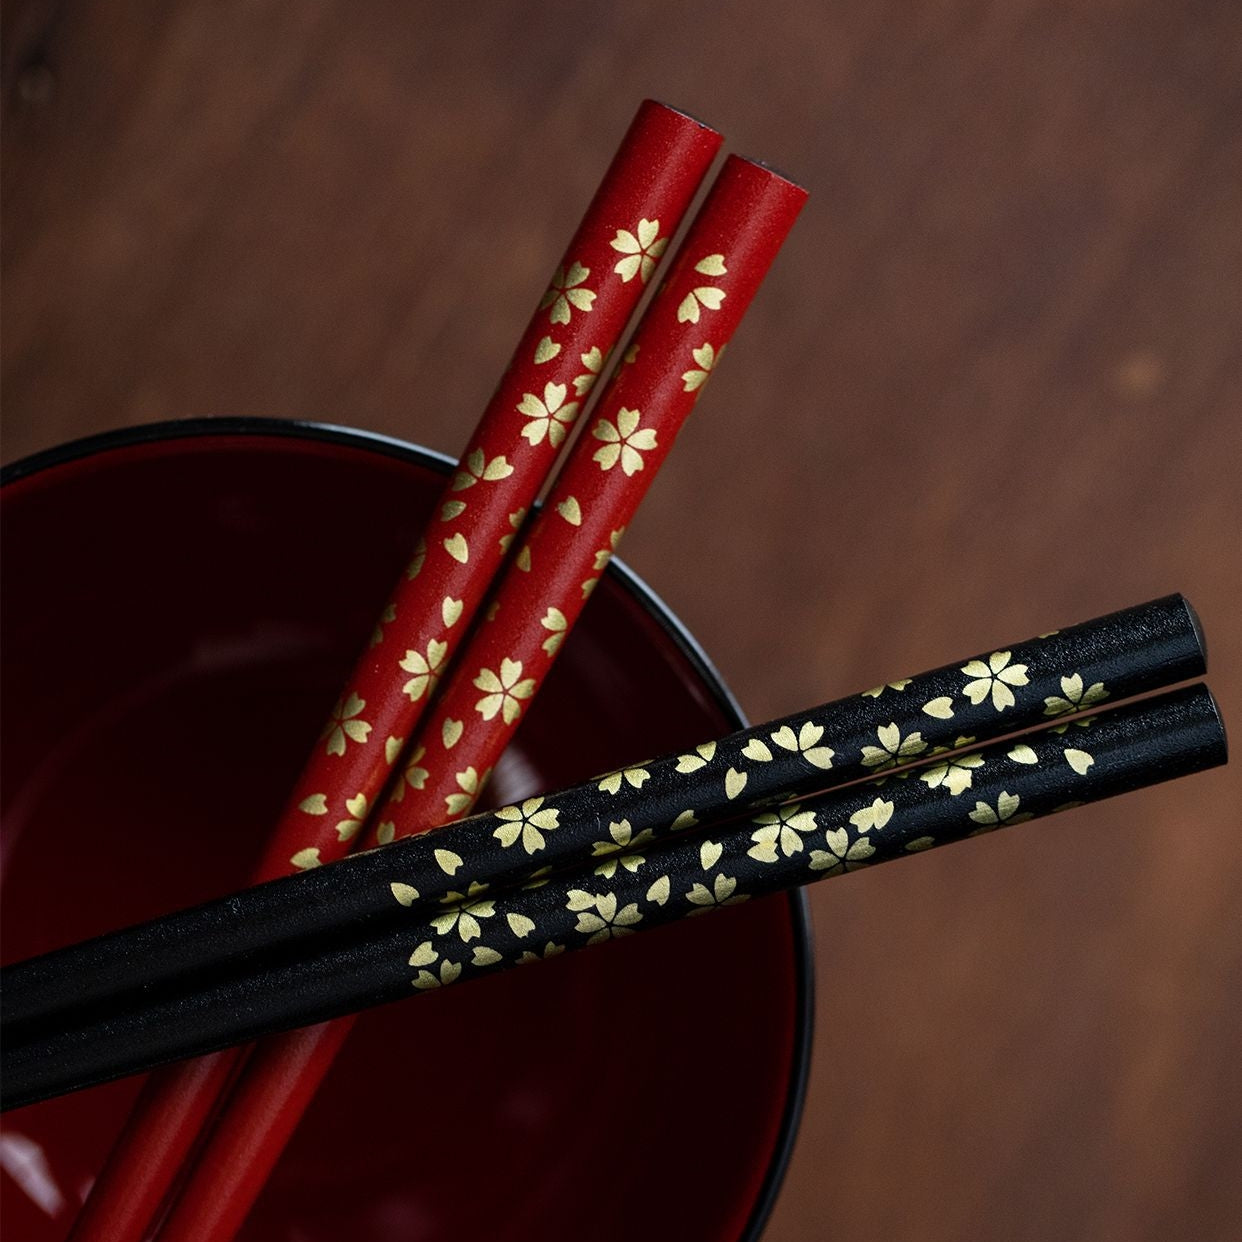 Yamanaka Shikki Sakura Couple Bowls with Chopsticks Set